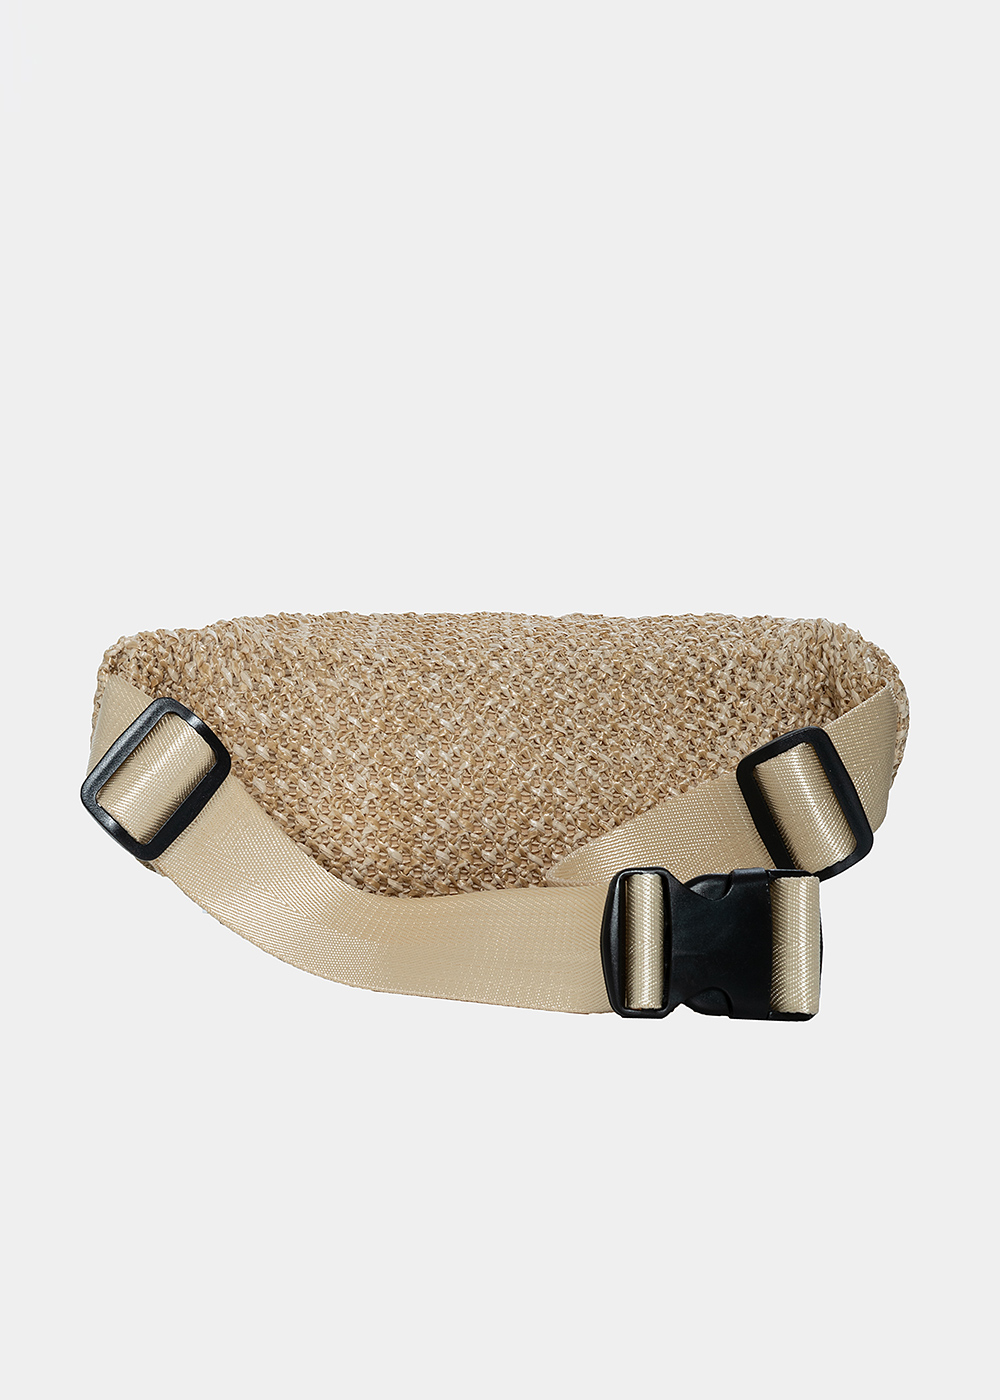 straw belt bag with fringes in beige 